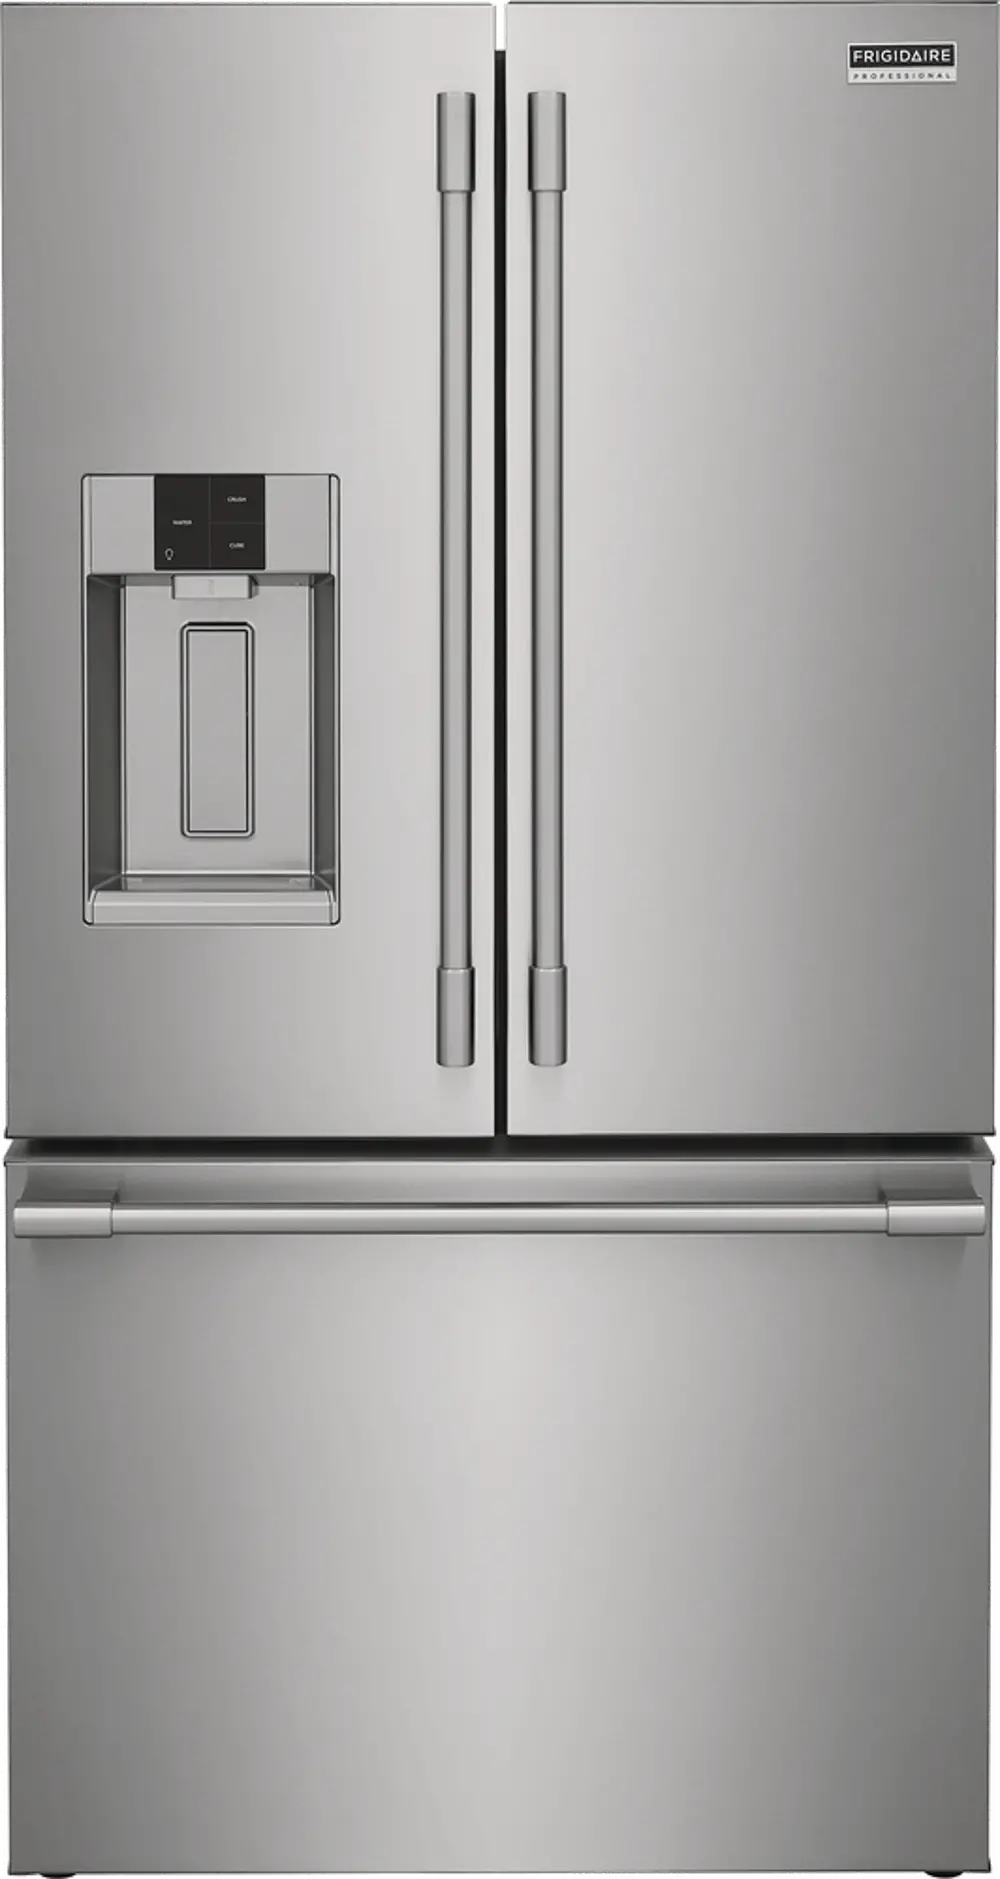 PRFS2883AF Frigidaire 27.8 cu ft Professional French Door Refrigerator - Stainless Steel-1